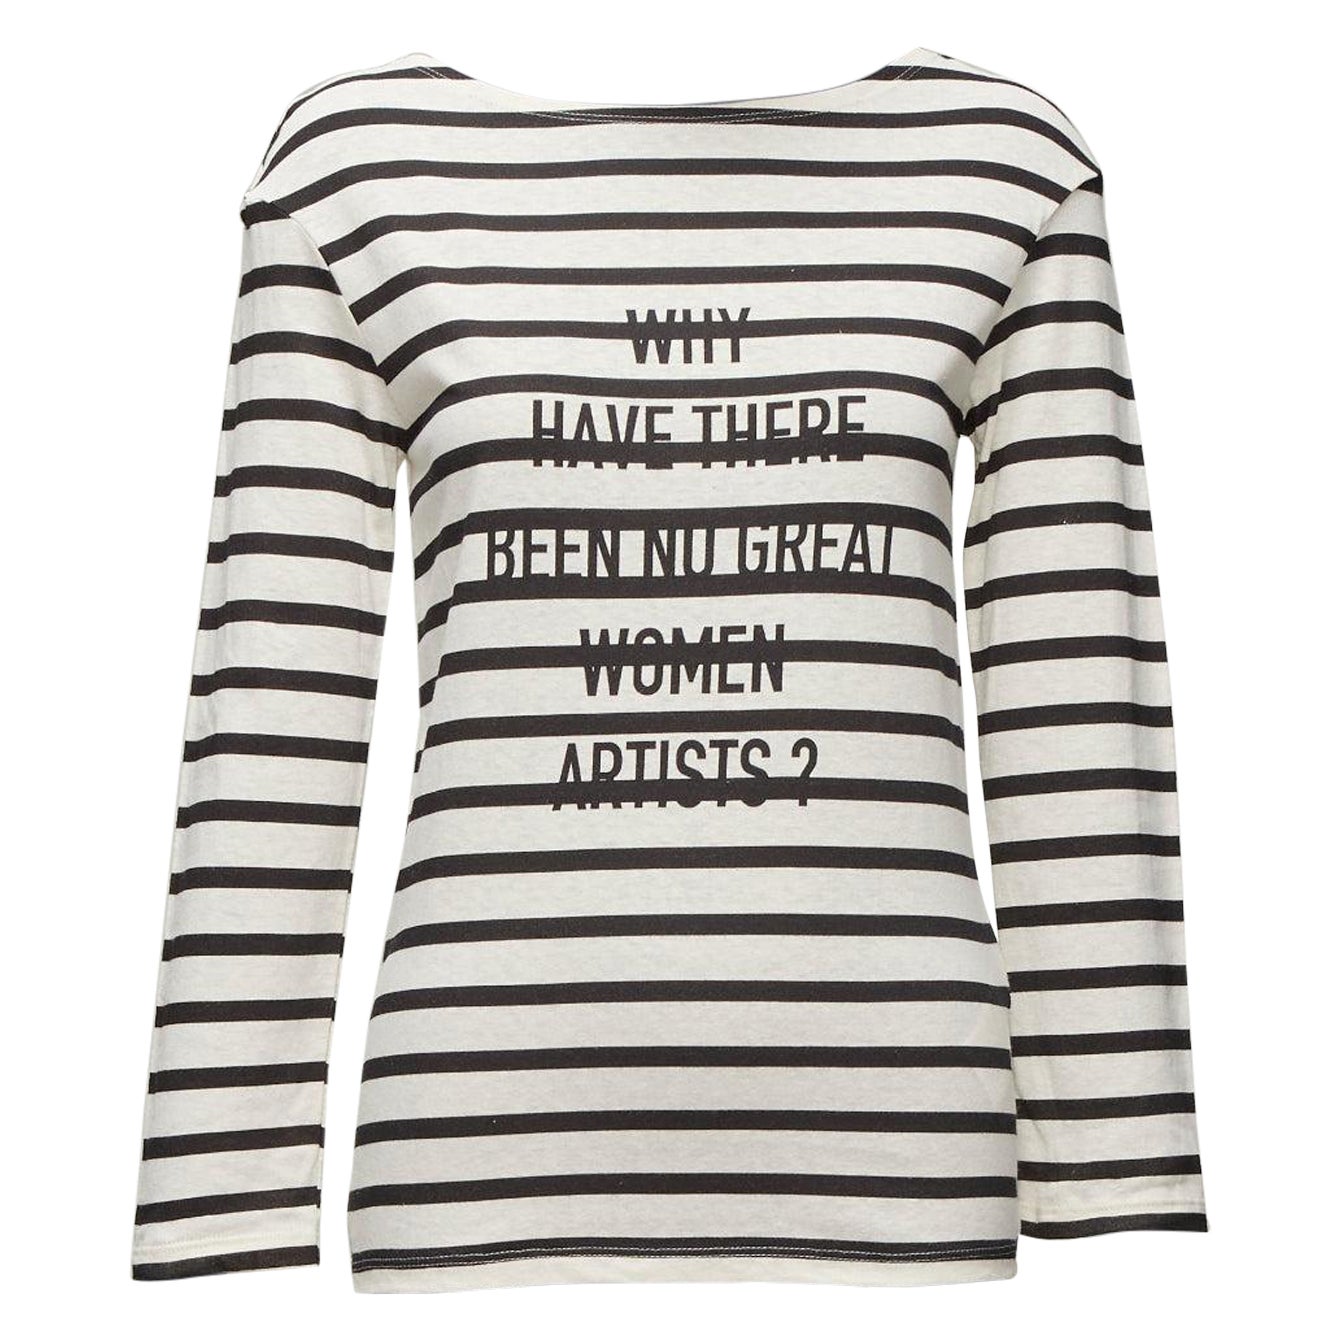 CHRISTIAN DIOR No Great Women Artists black cream stripes long sleeve tshirt XS For Sale